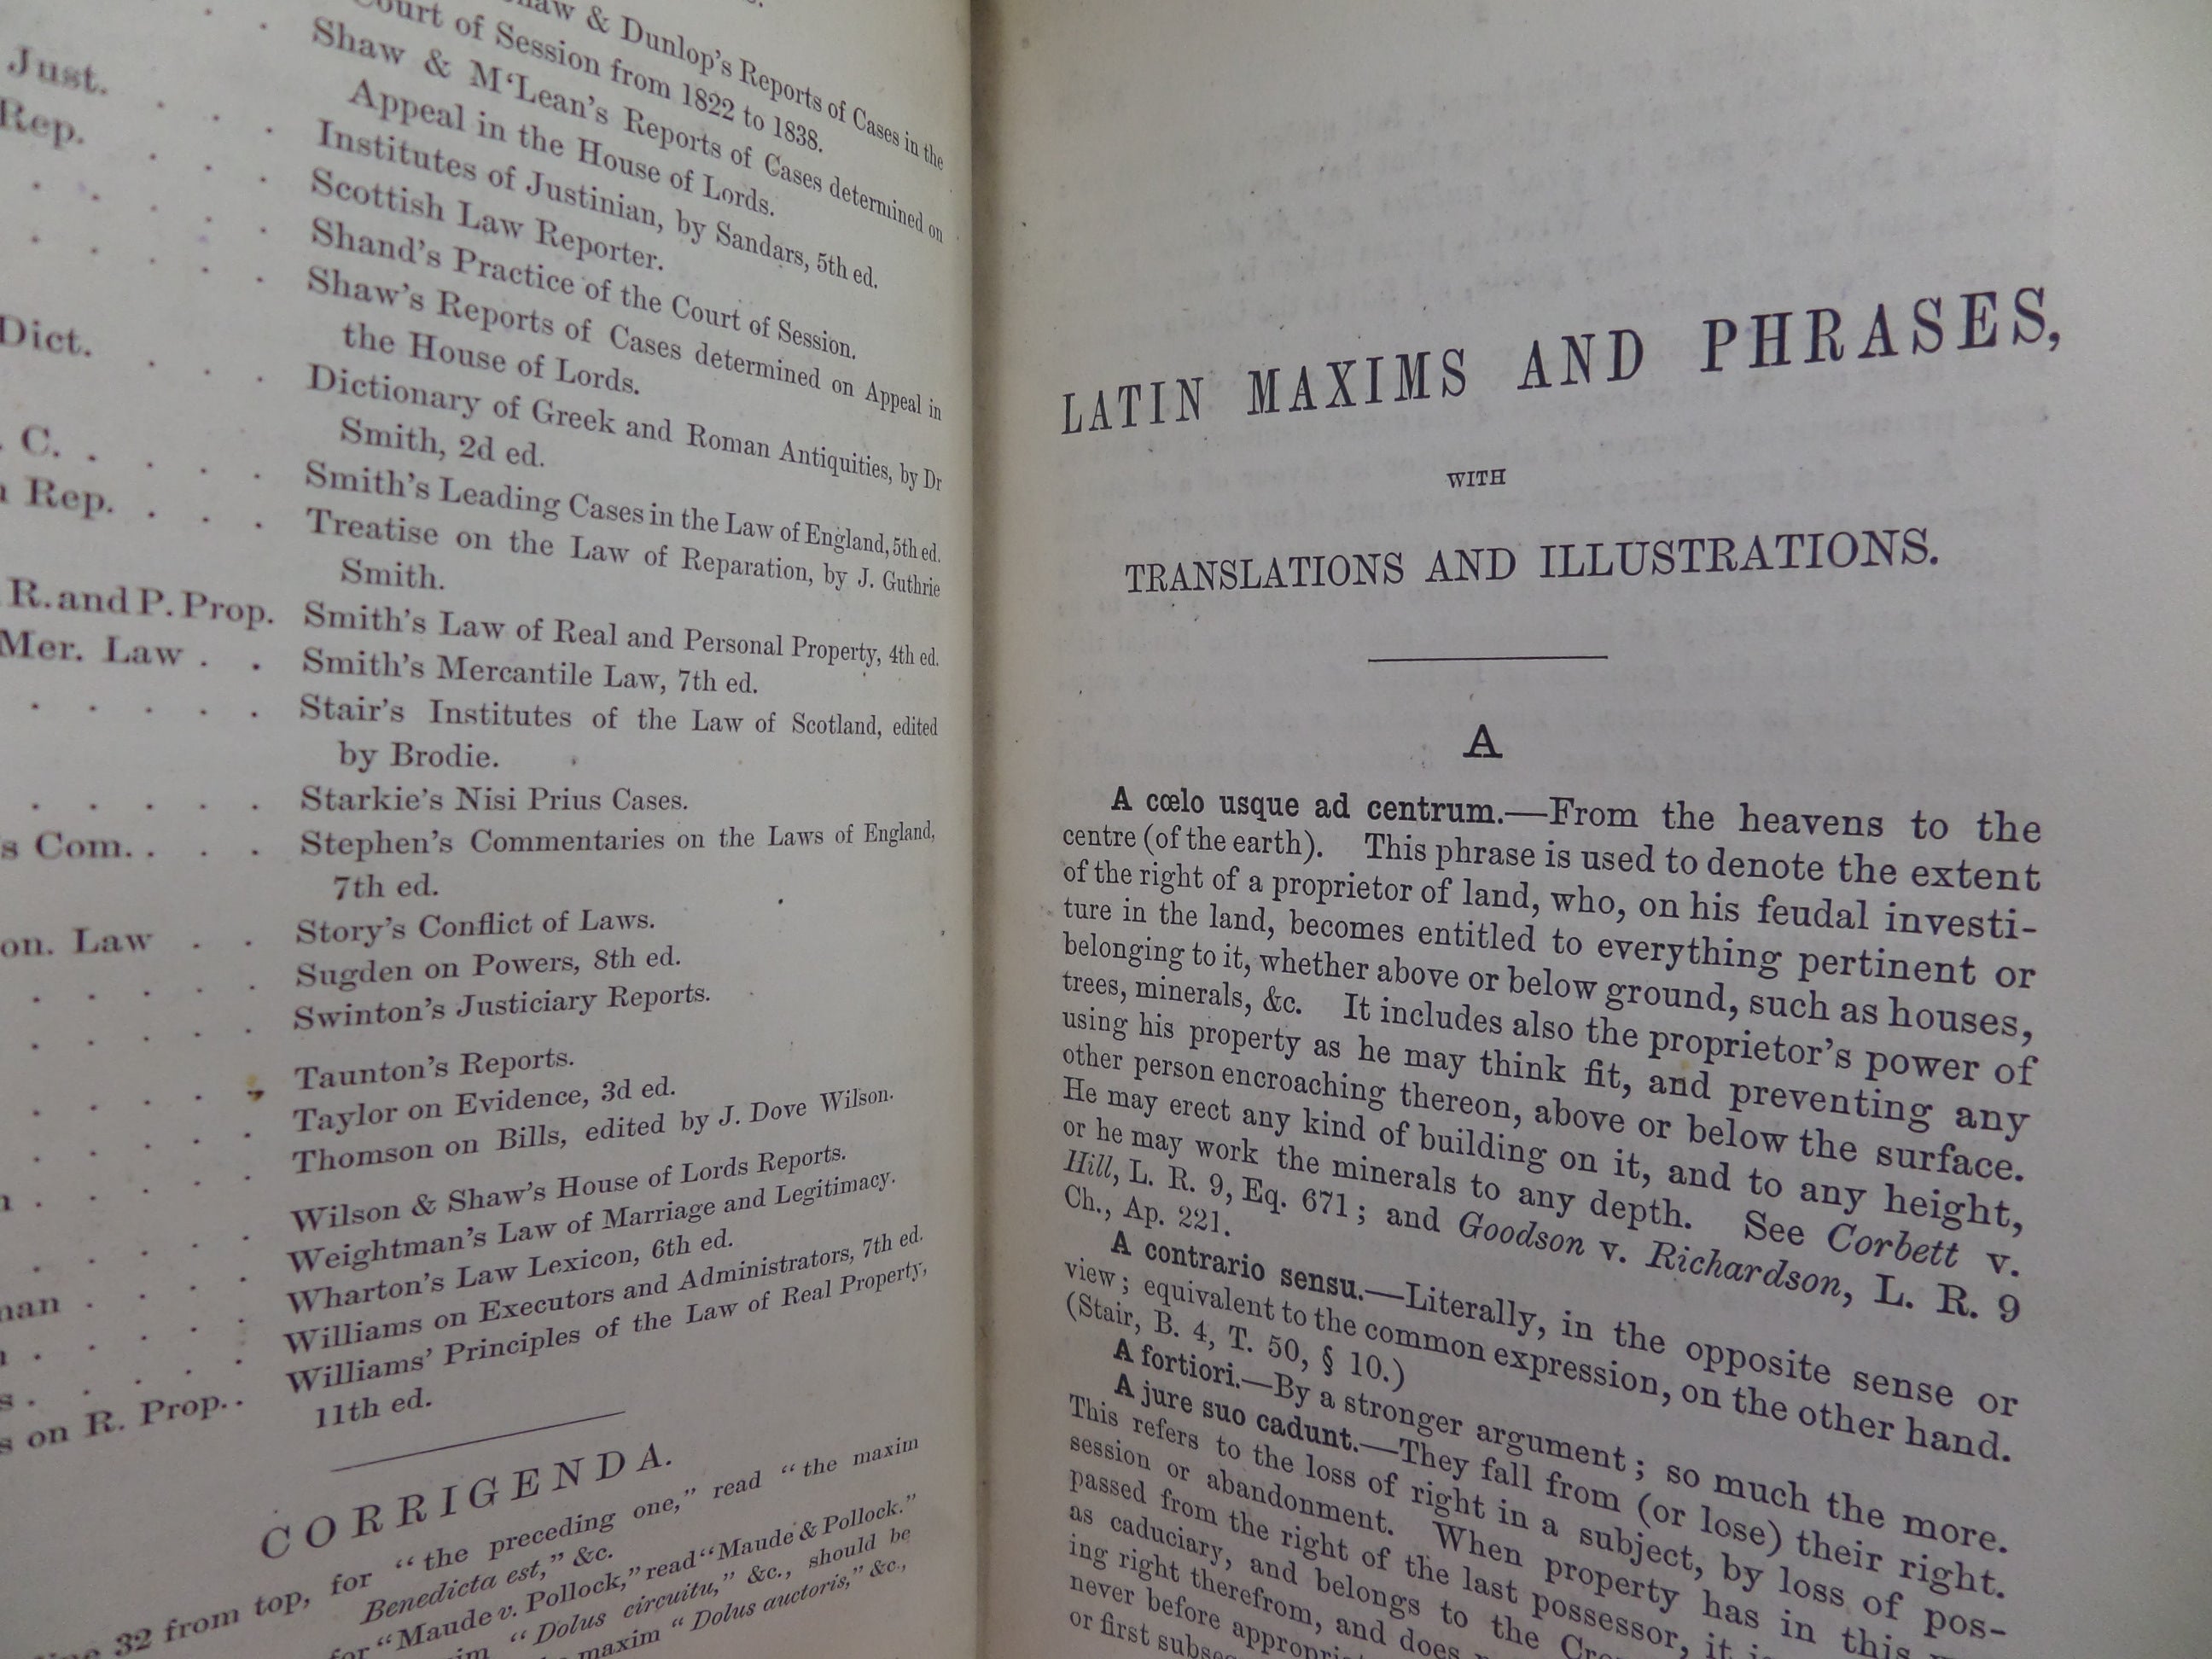 LATIN MAXIMS AND PHRASES BY JOHN TRAYNER 1876 HARDCOVER